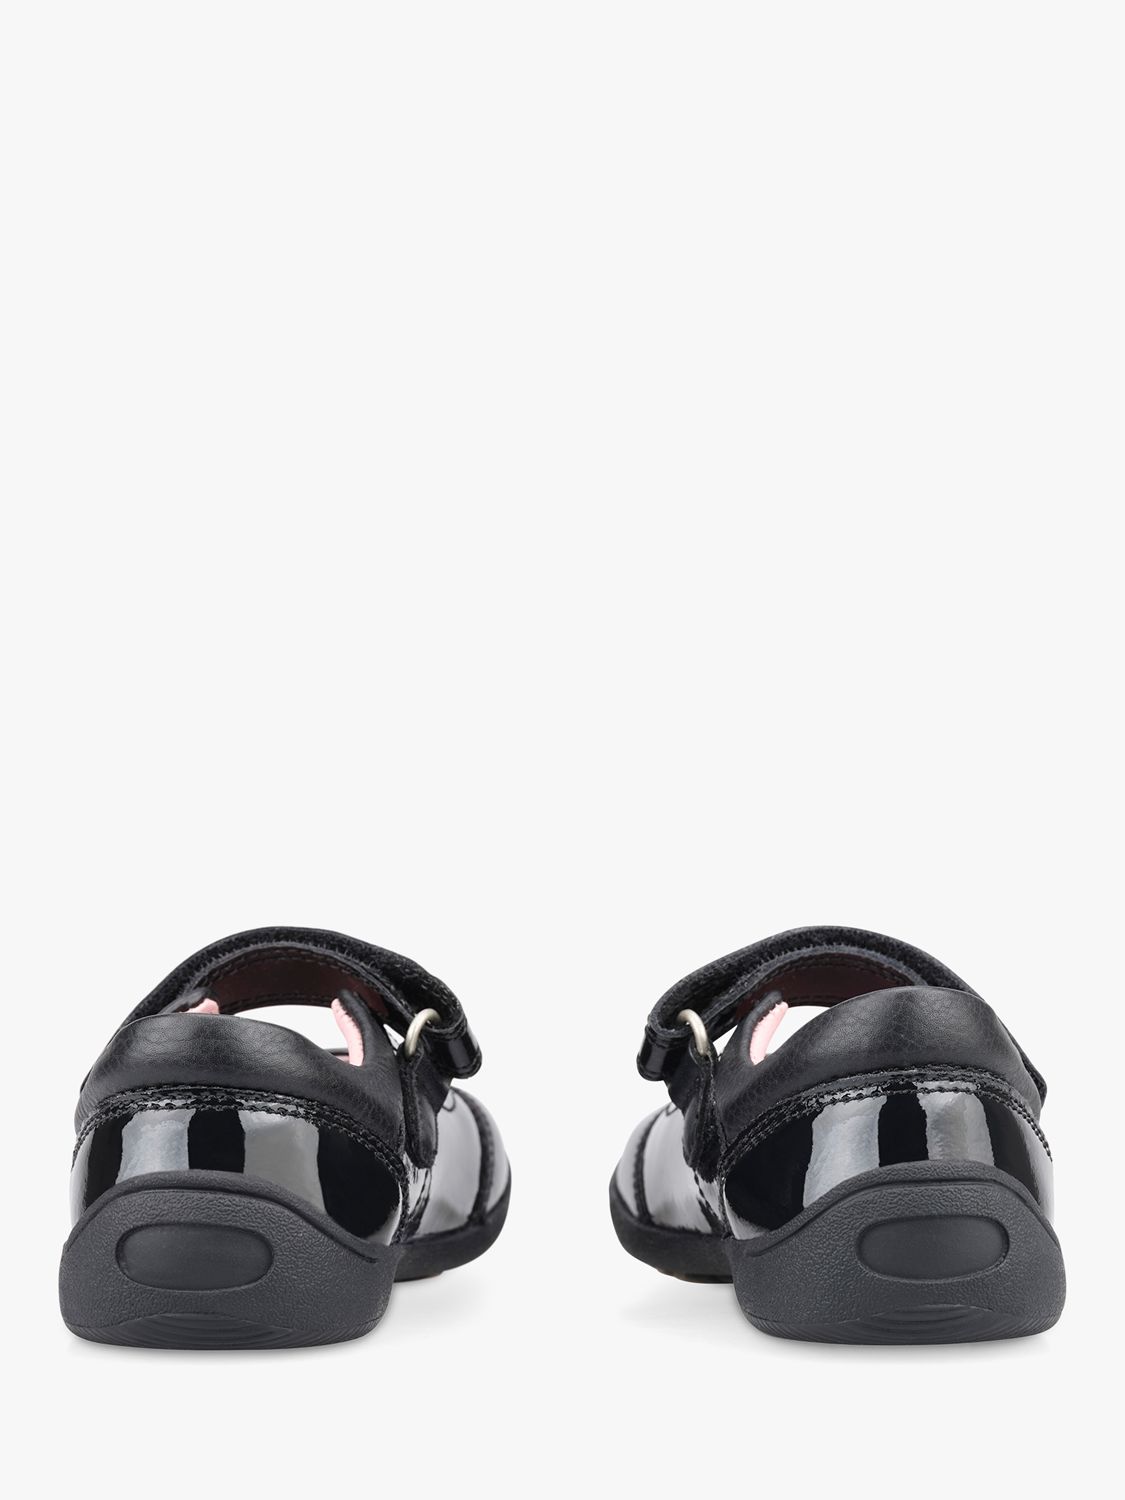 Start-Rite Kids' Twizzle Patent Shoes, Black, 8G Jnr